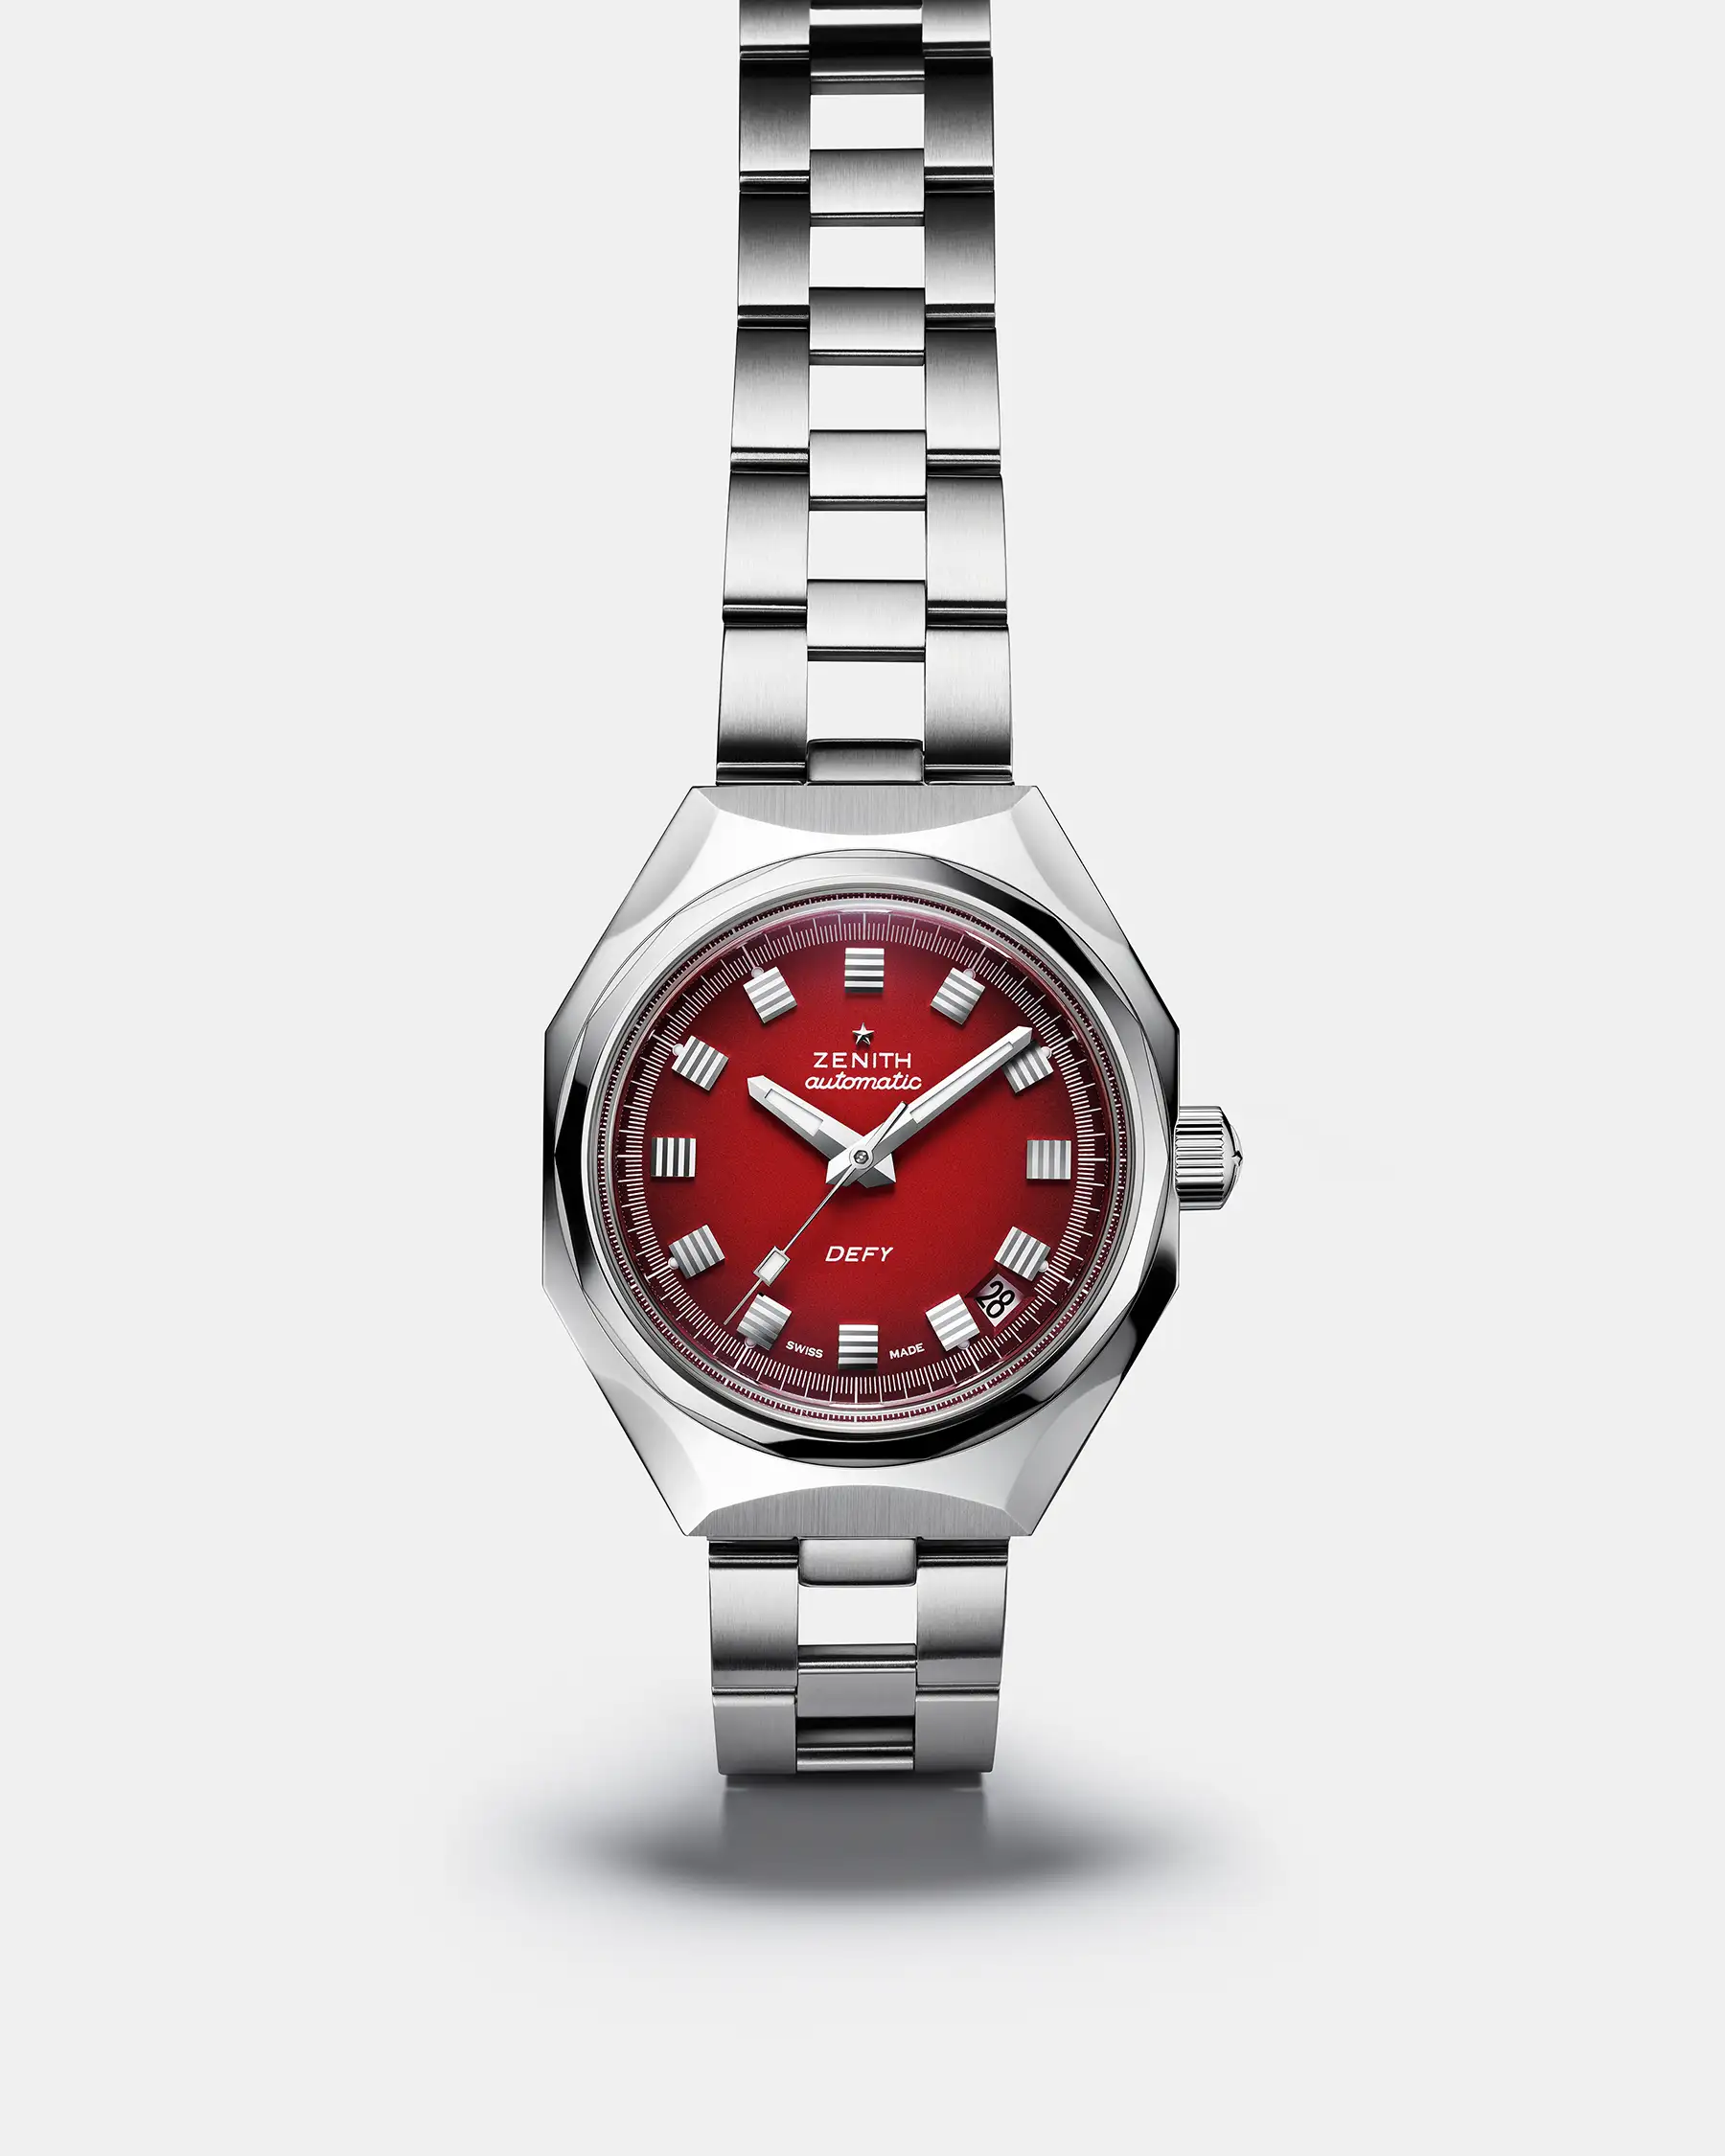 Introducing the Zenith Defy Classic Fusalp - Revolution Watch